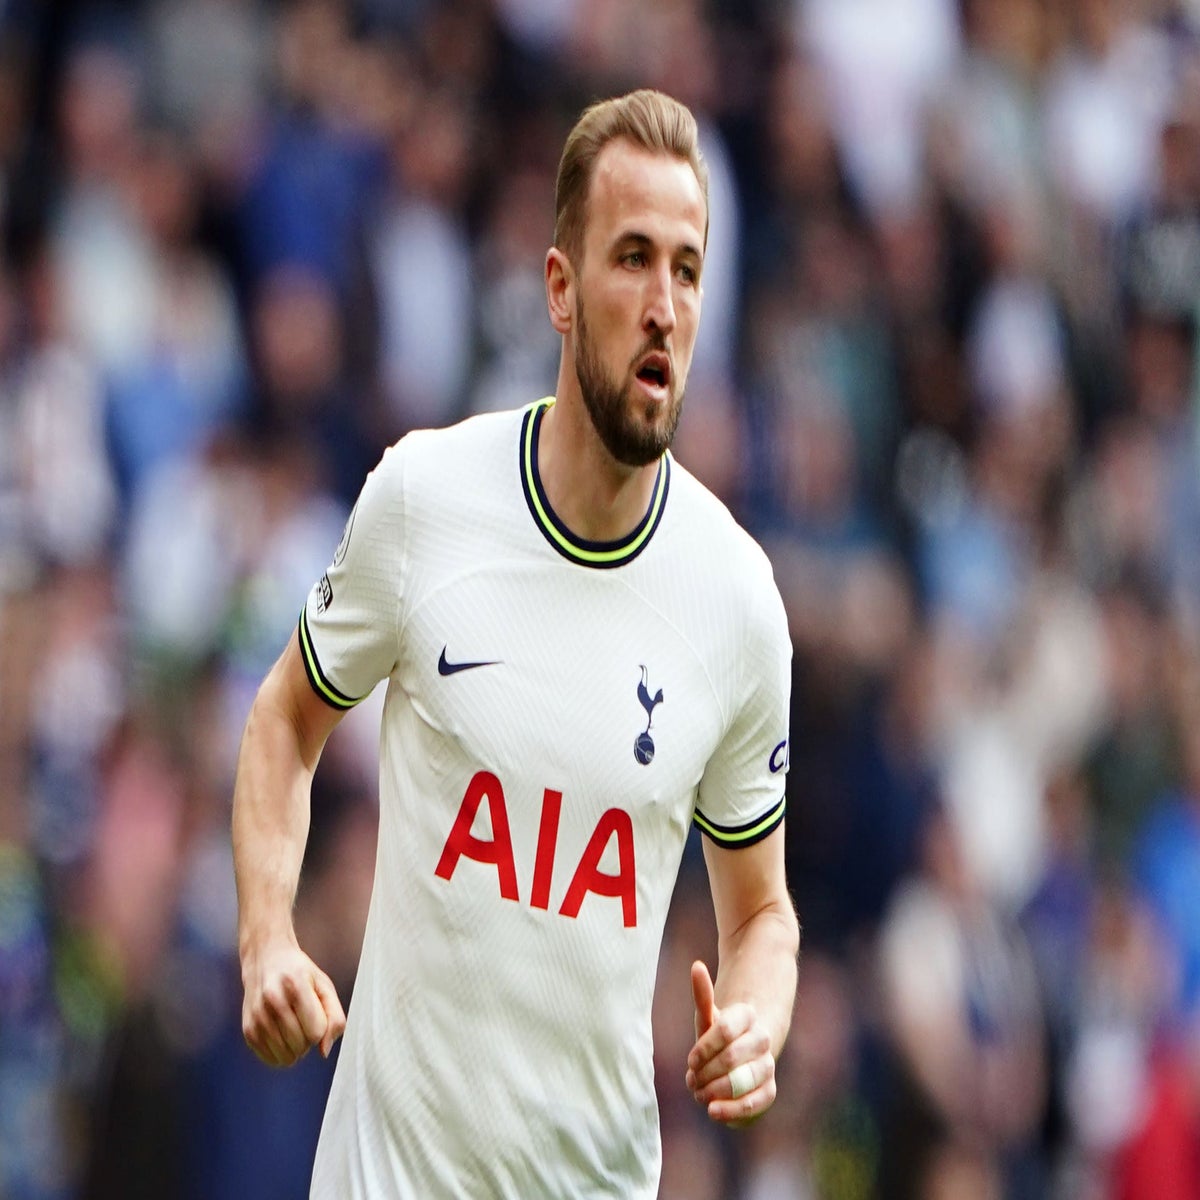 Football: Soccer-Kane an inspiration for Spurs' squad, says Mason